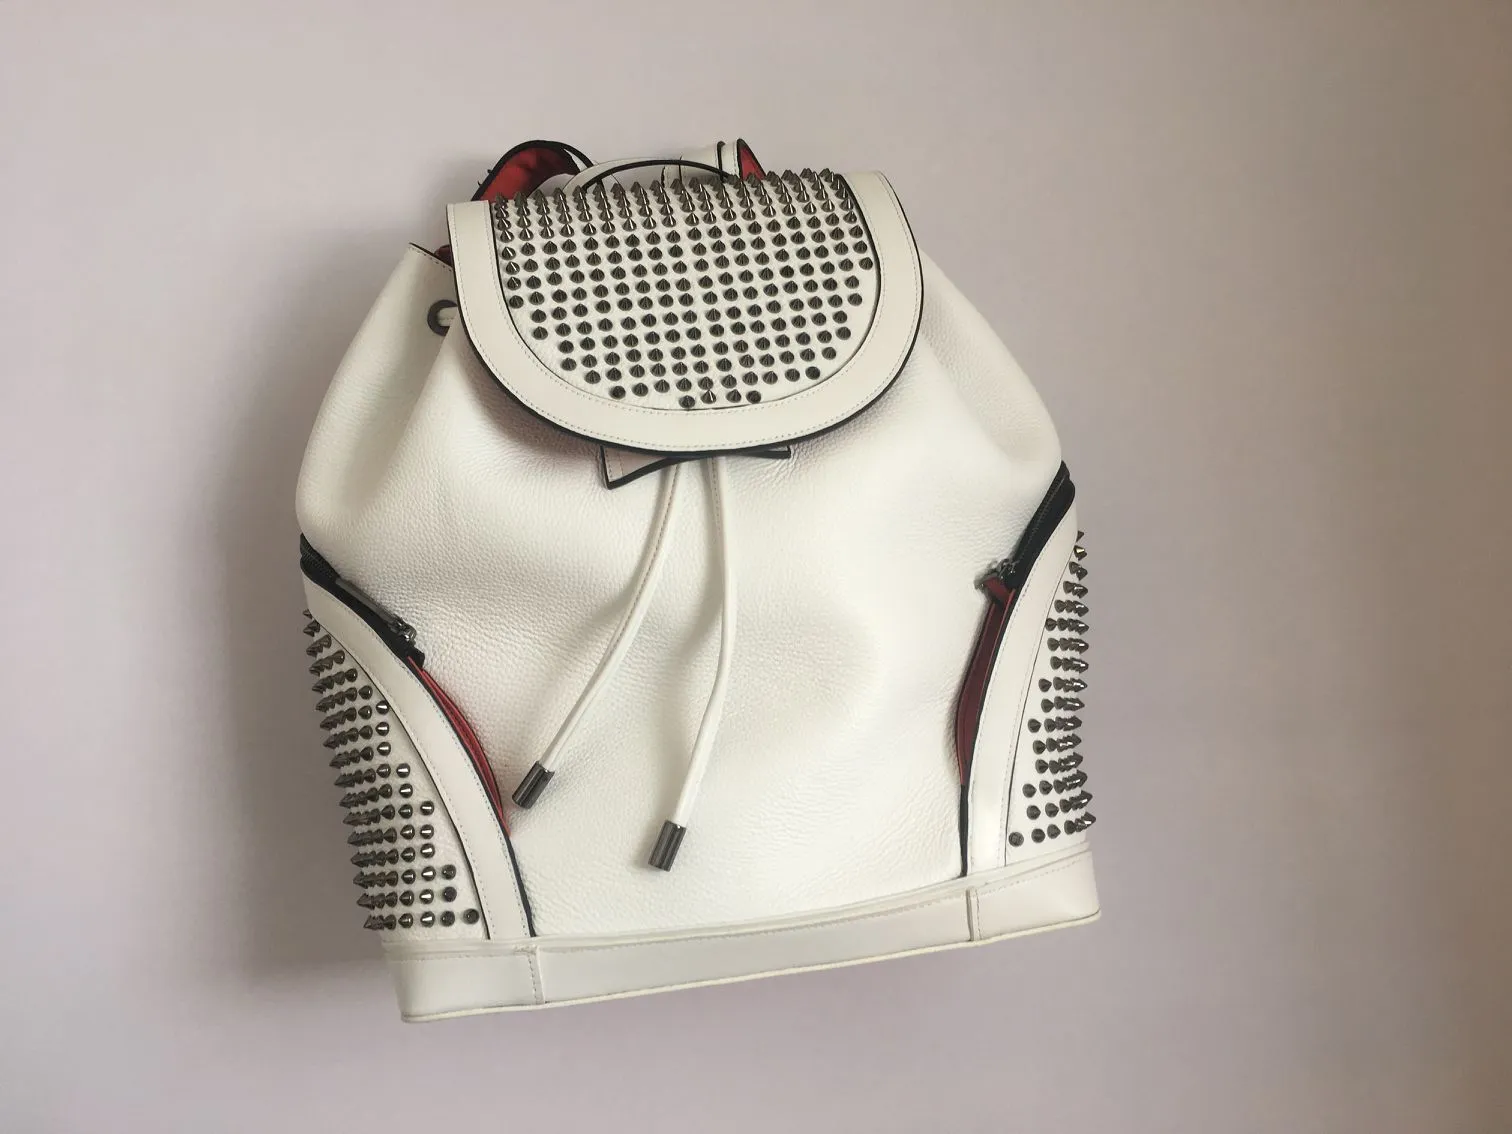 Top New Fashion backpack Luxury handbag Designer high quality lovers school bag fashion handbags studded rivets real leather women241C